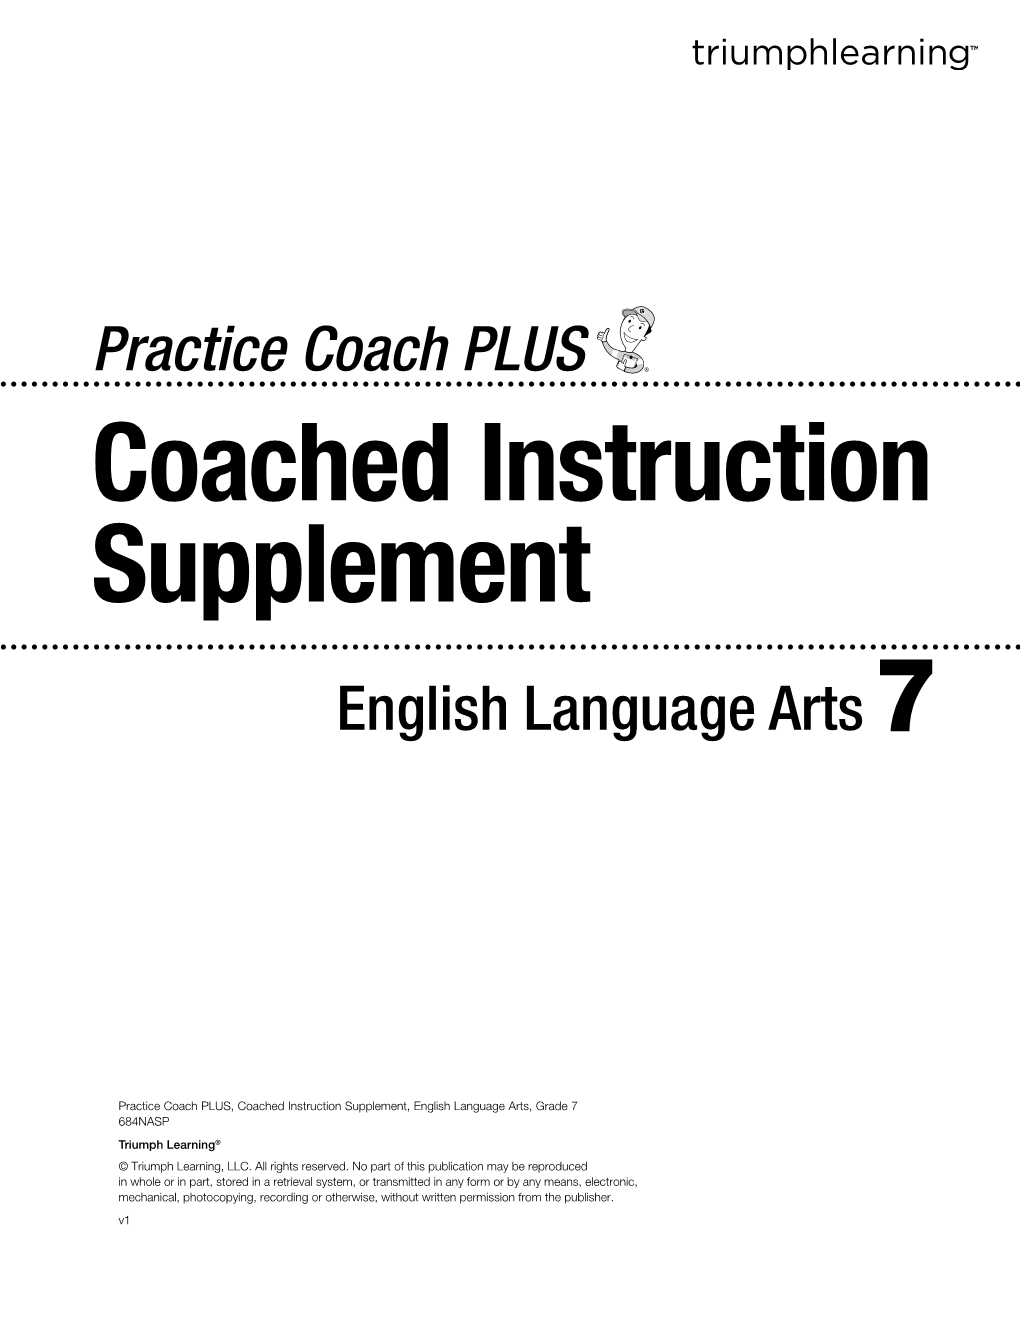 Coached Instruction Supplement English Language Arts 7